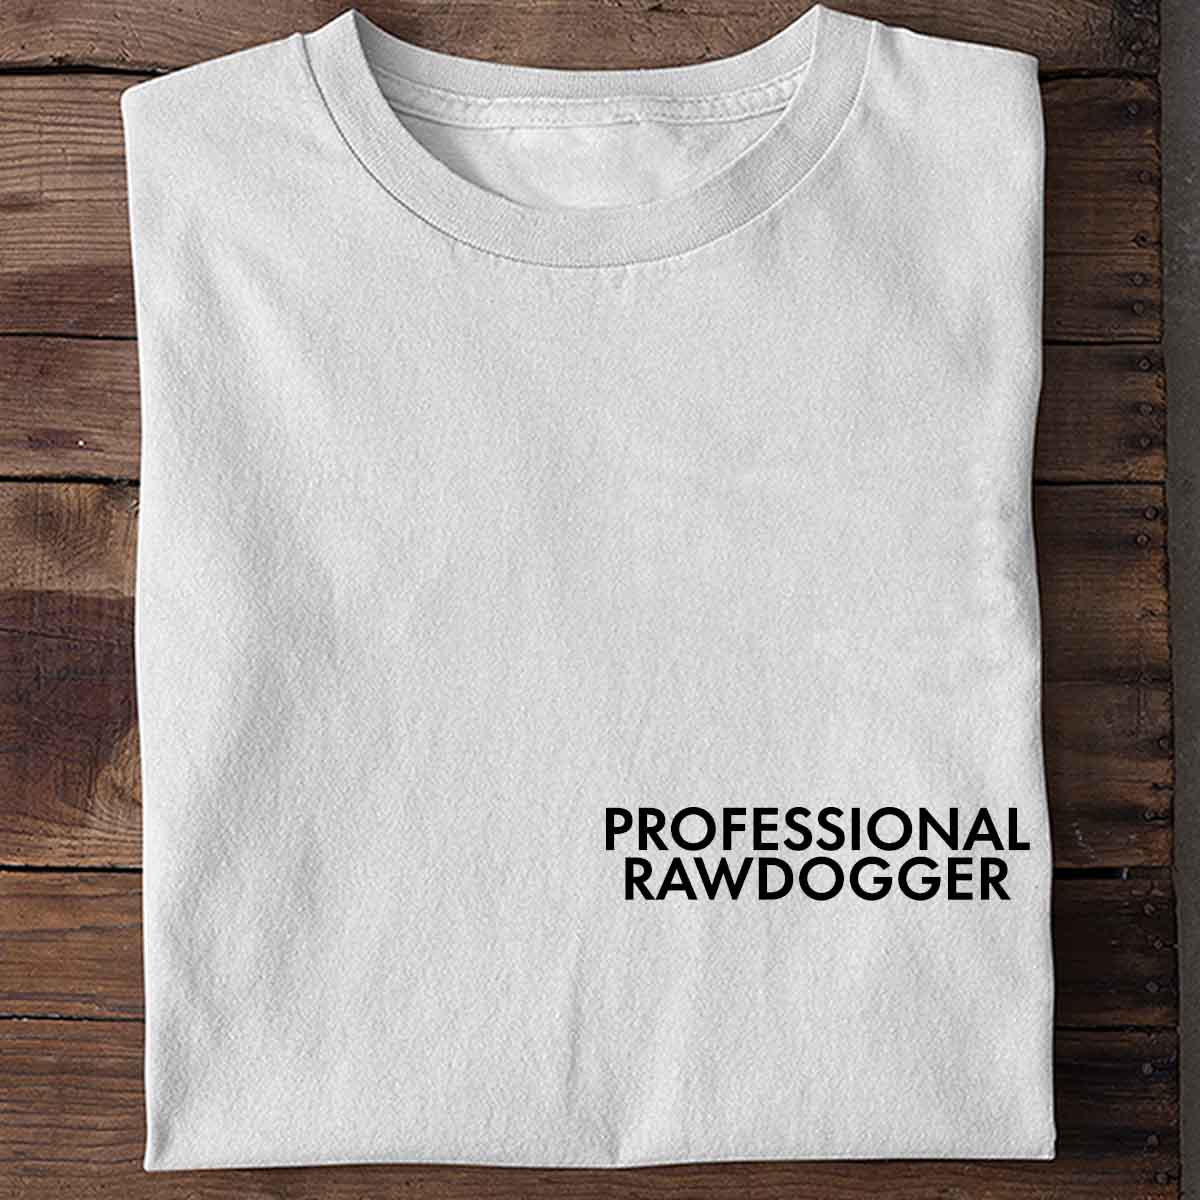 Professional Rawdogger - Shirt Unisex Chest